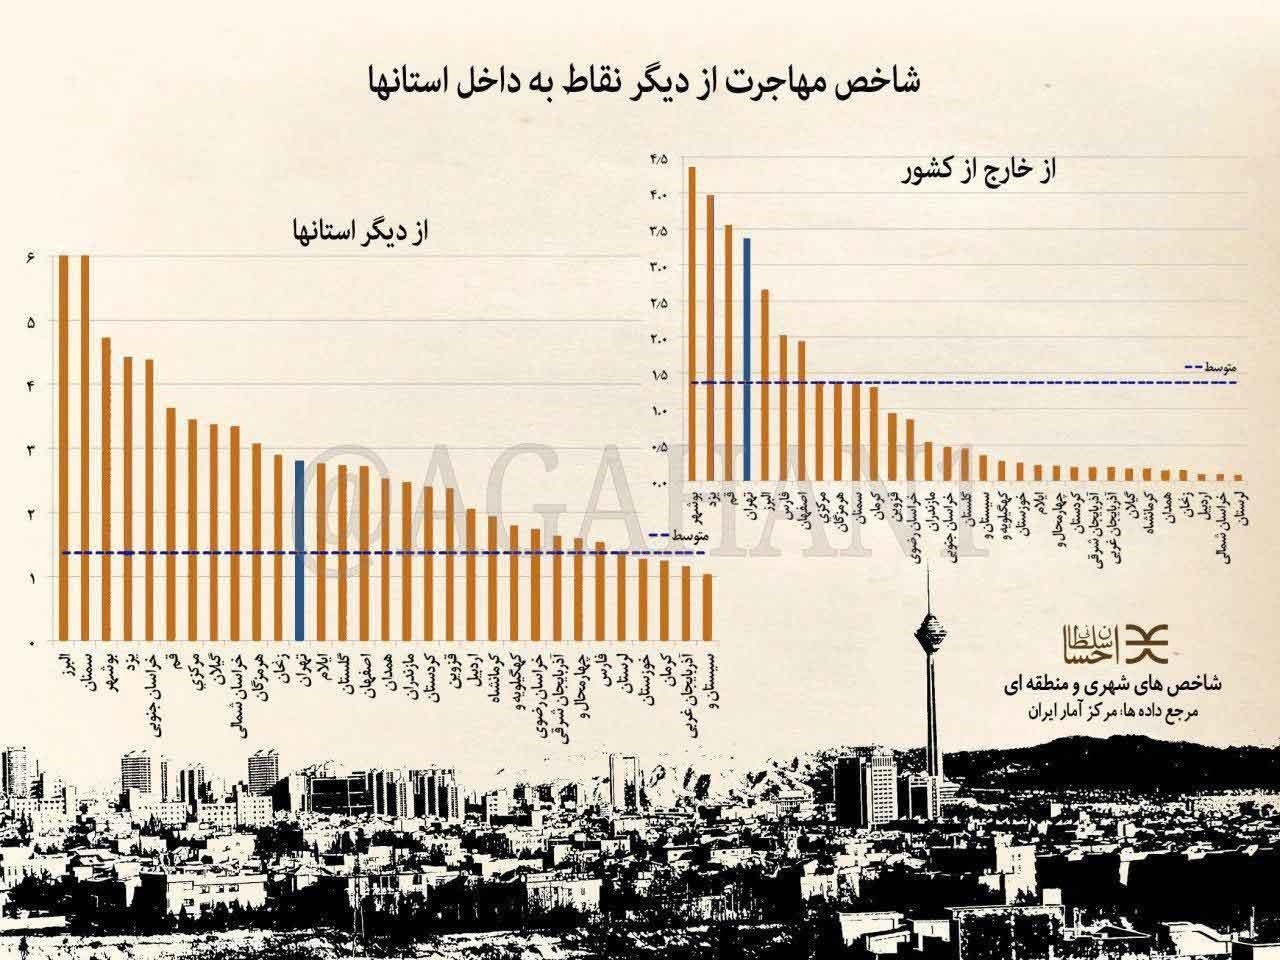 بوشهر مهاجر پذیرترین شهر کشور +اینفوگرافیک